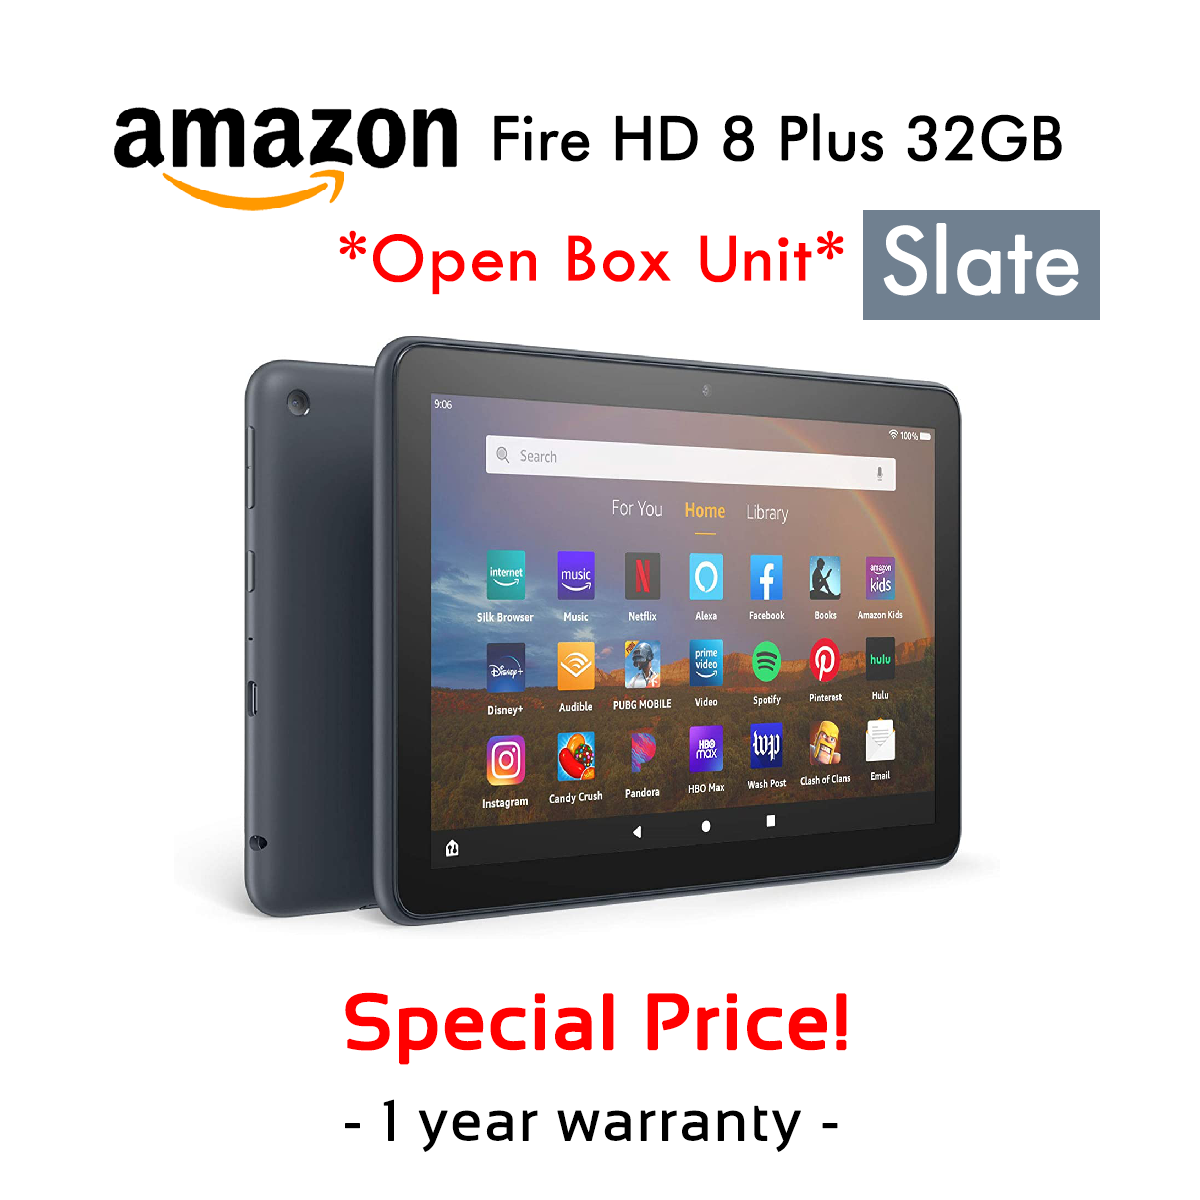 Amazon Fire HD 8 Plus 32GB (10th Gen),8 Inch 1080p HD Display, 32